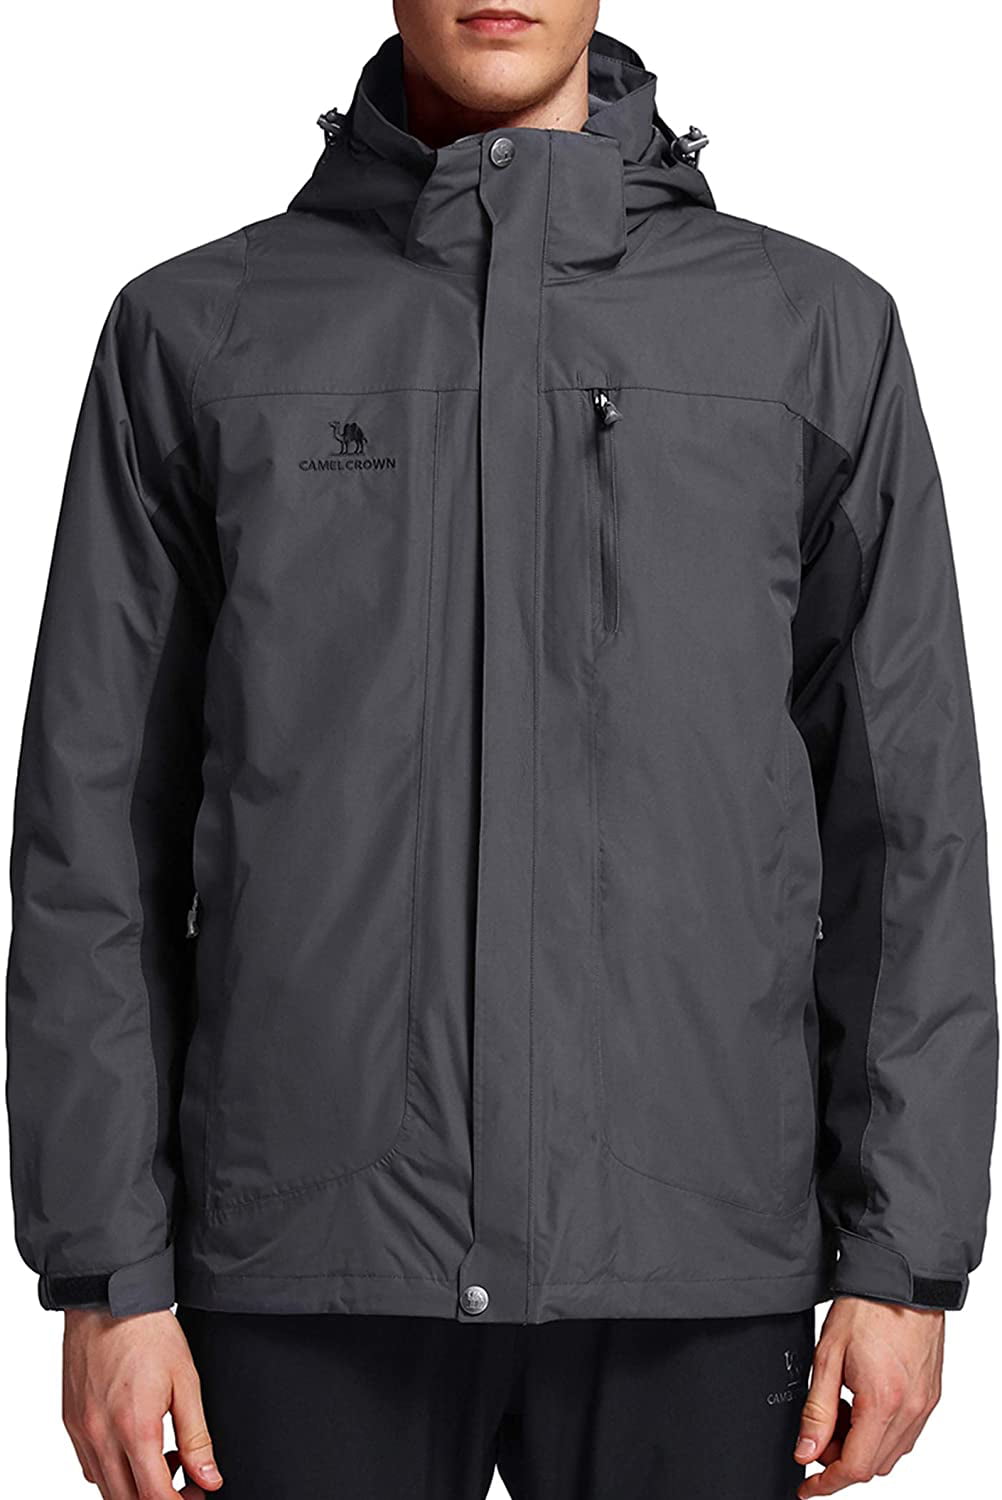 CAMELSPORTS Men's Mountain Ski Jacket 3 in 1 Waterproof Winter Jacket Warm Snow Jacket Hooded Rain Coat Windproof Winter Coat 